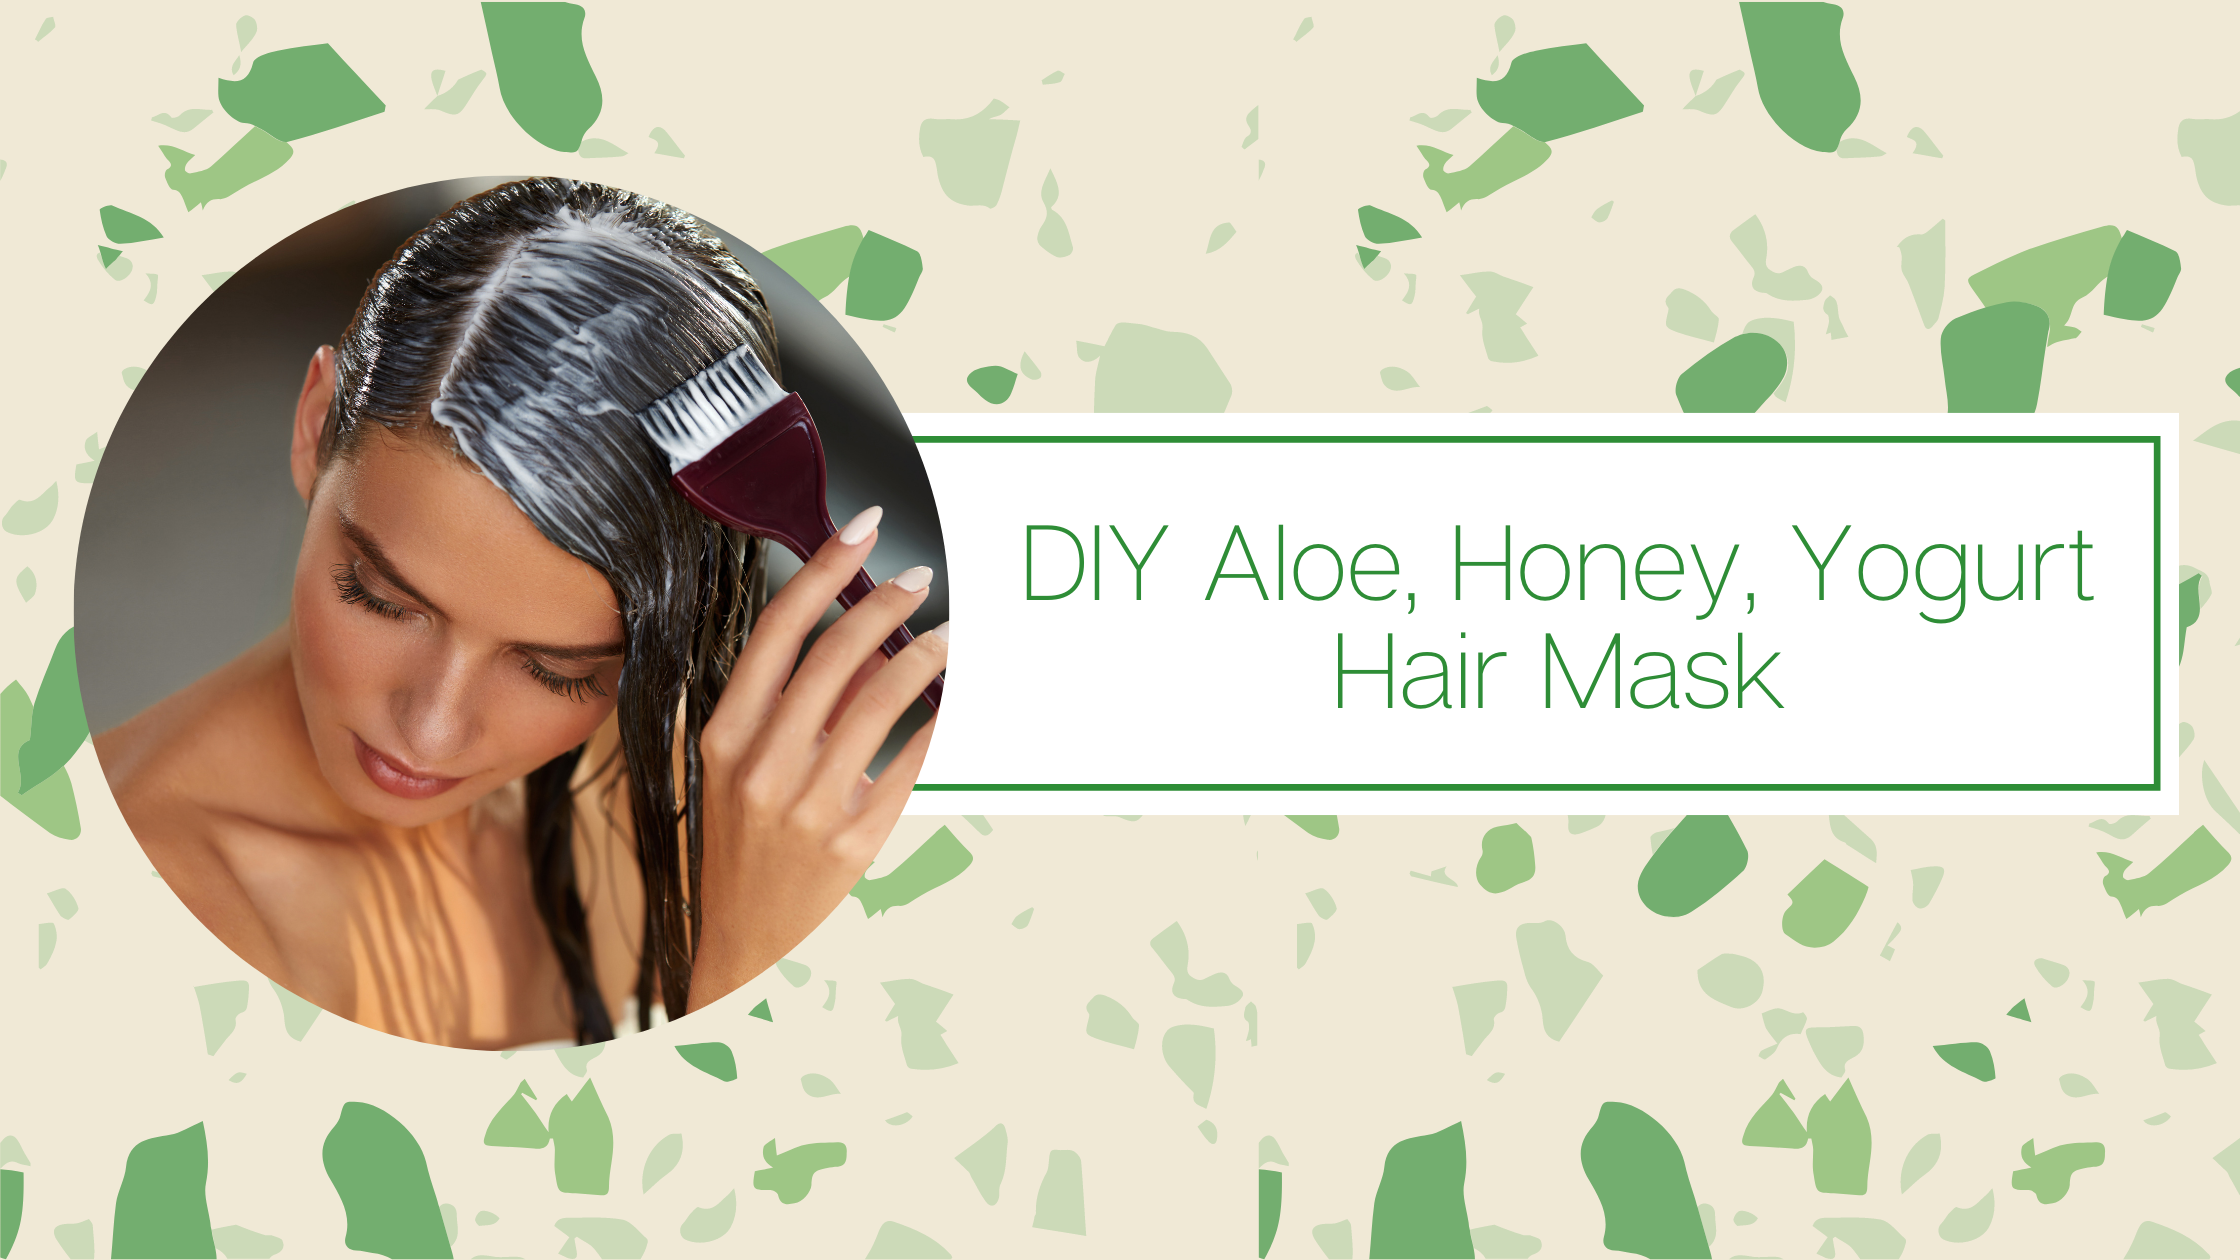 Homemade Hair Mask And Ingredients For Moisturizing Honey Egg Yogurt Aloe  On White Background Stock Photo - Download Image Now - iStock